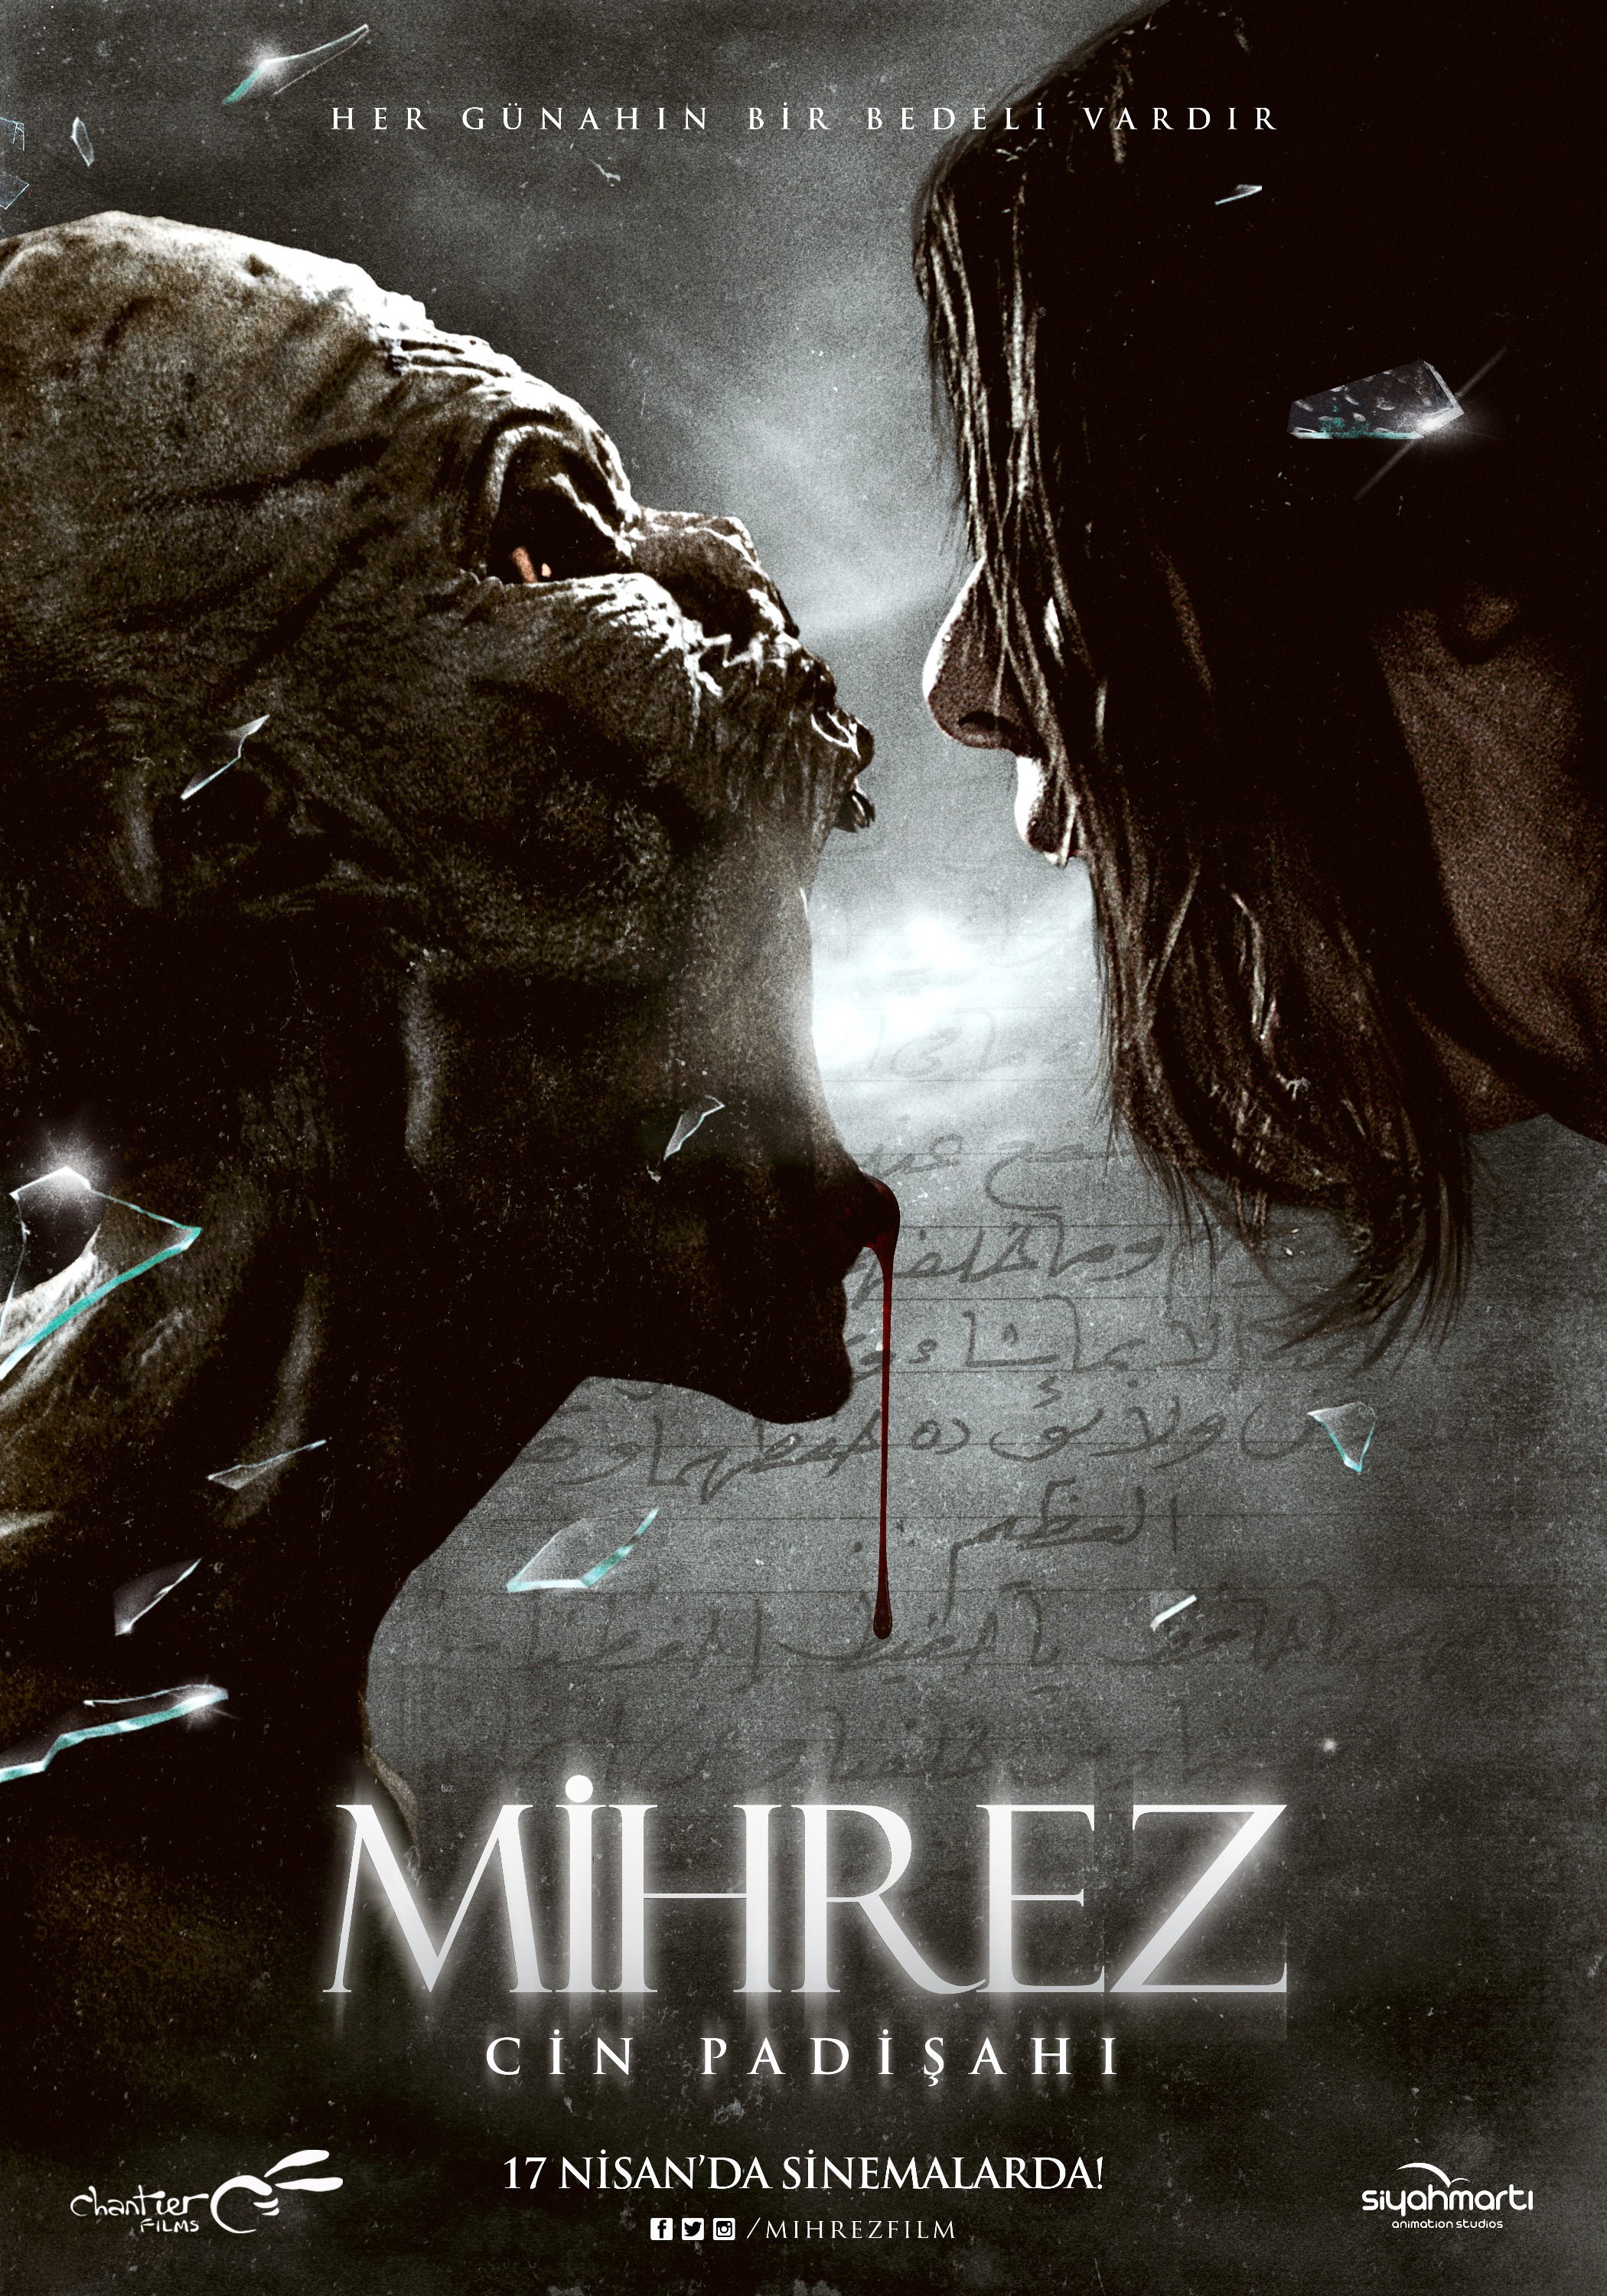 Mega Sized Movie Poster Image for Mihrez: Cin Padisahi (#1 of 2)